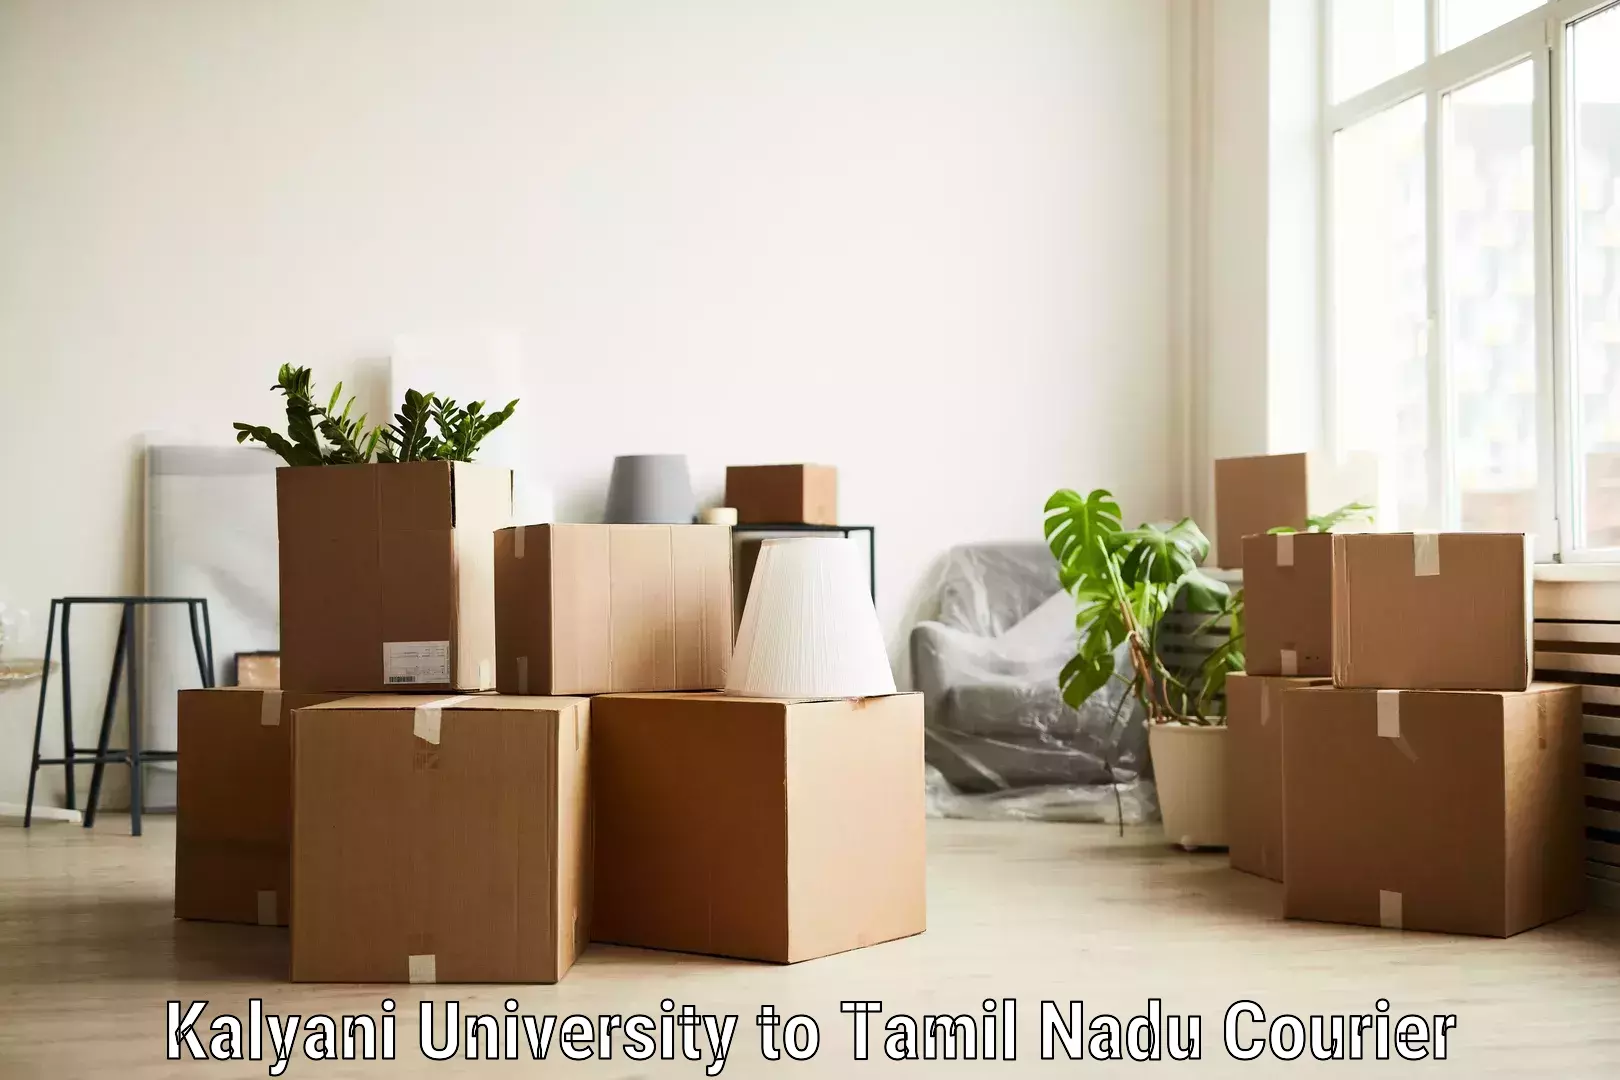 Small business couriers Kalyani University to Tamil Nadu